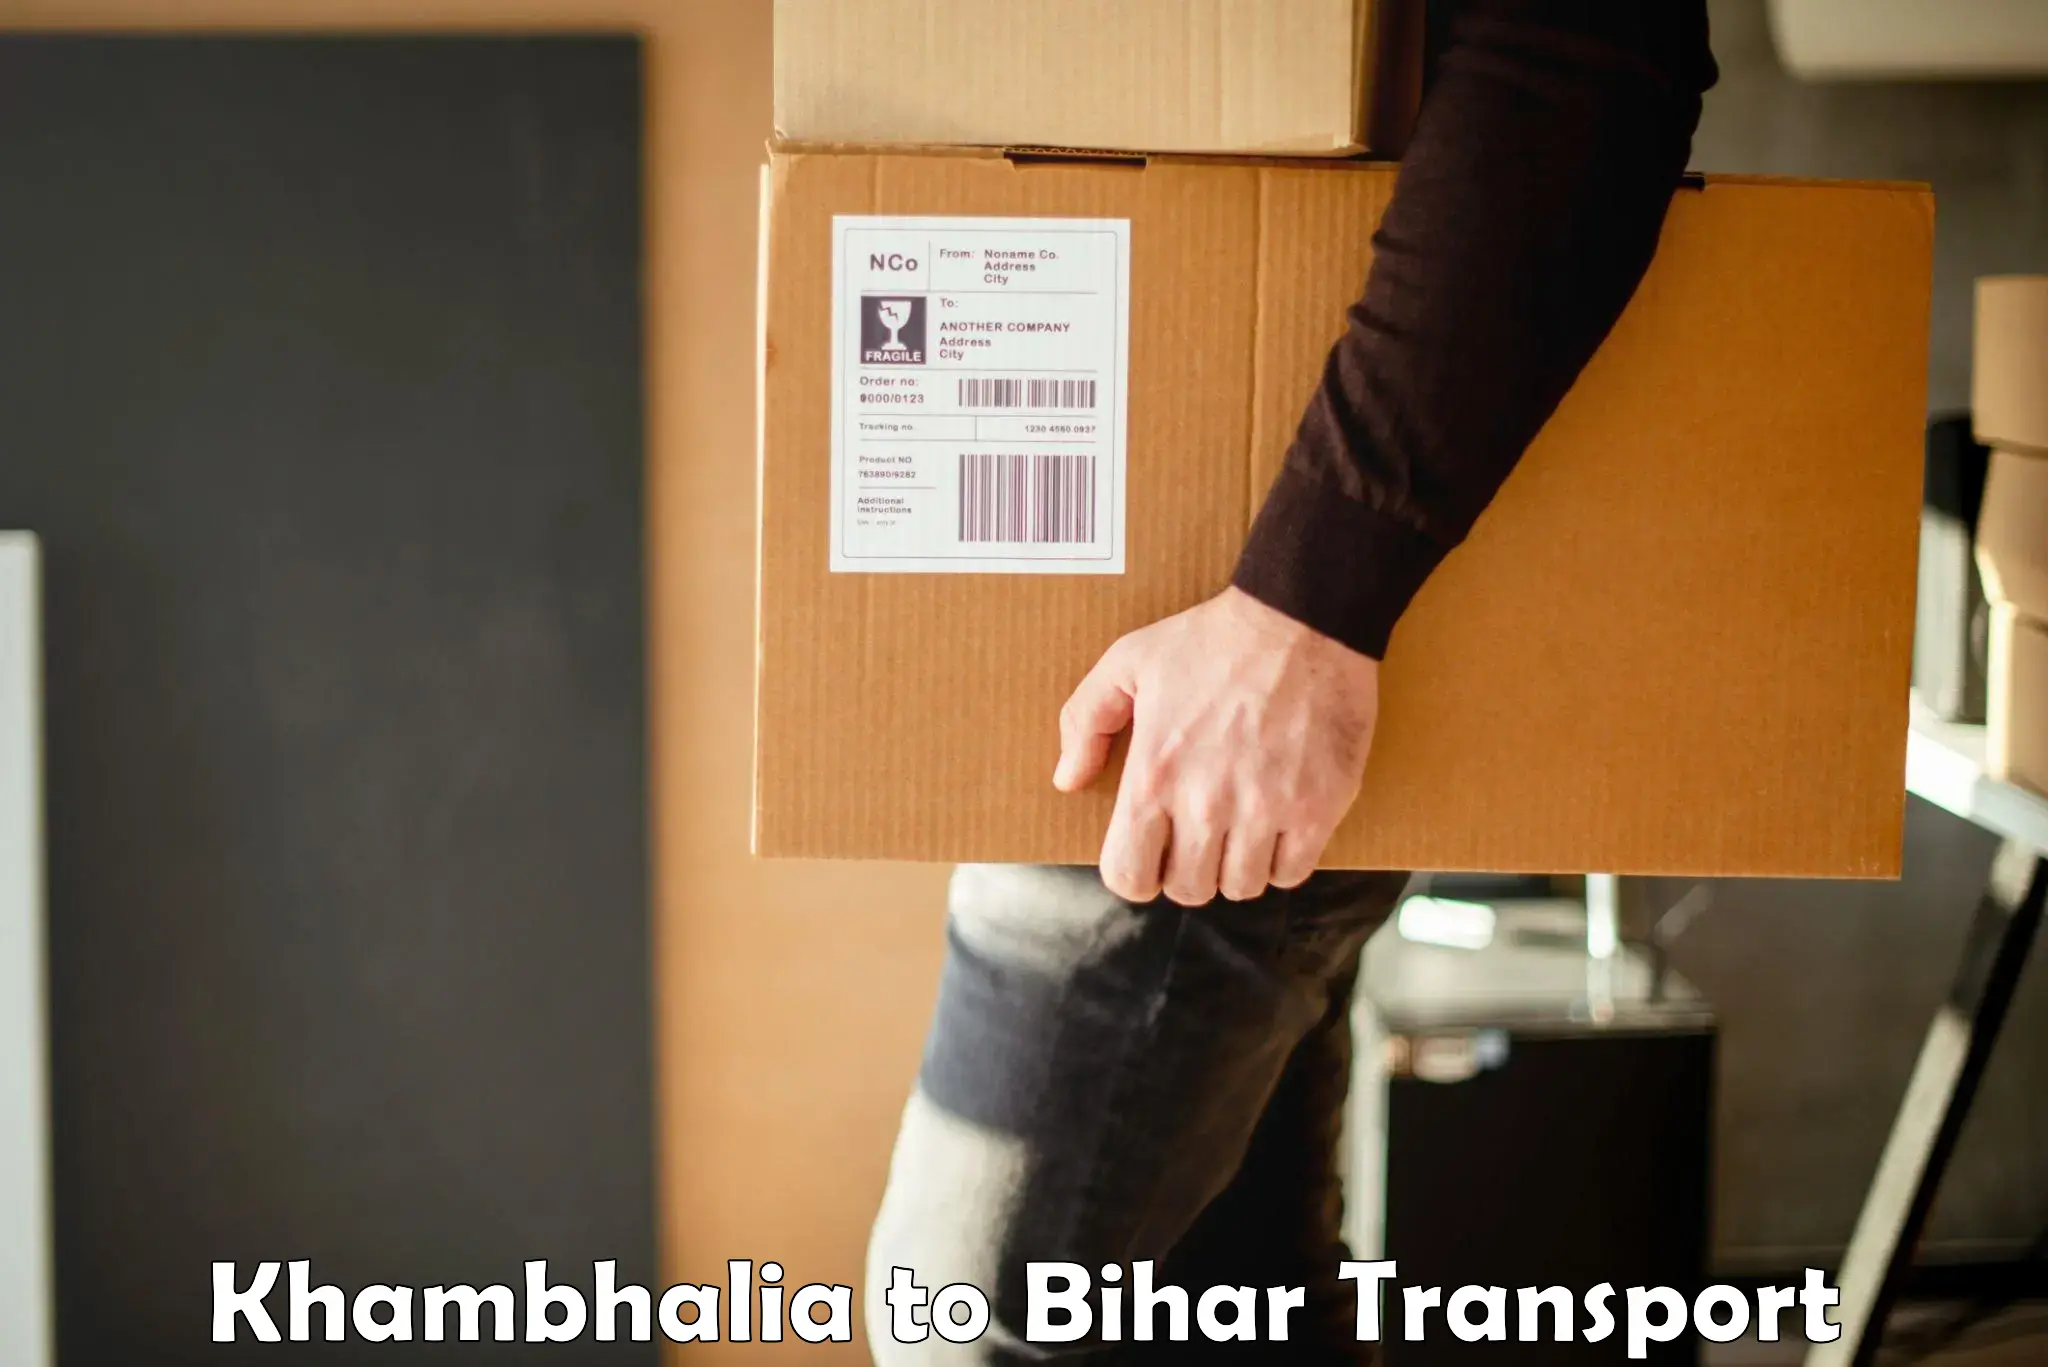 Shipping partner Khambhalia to Katoria